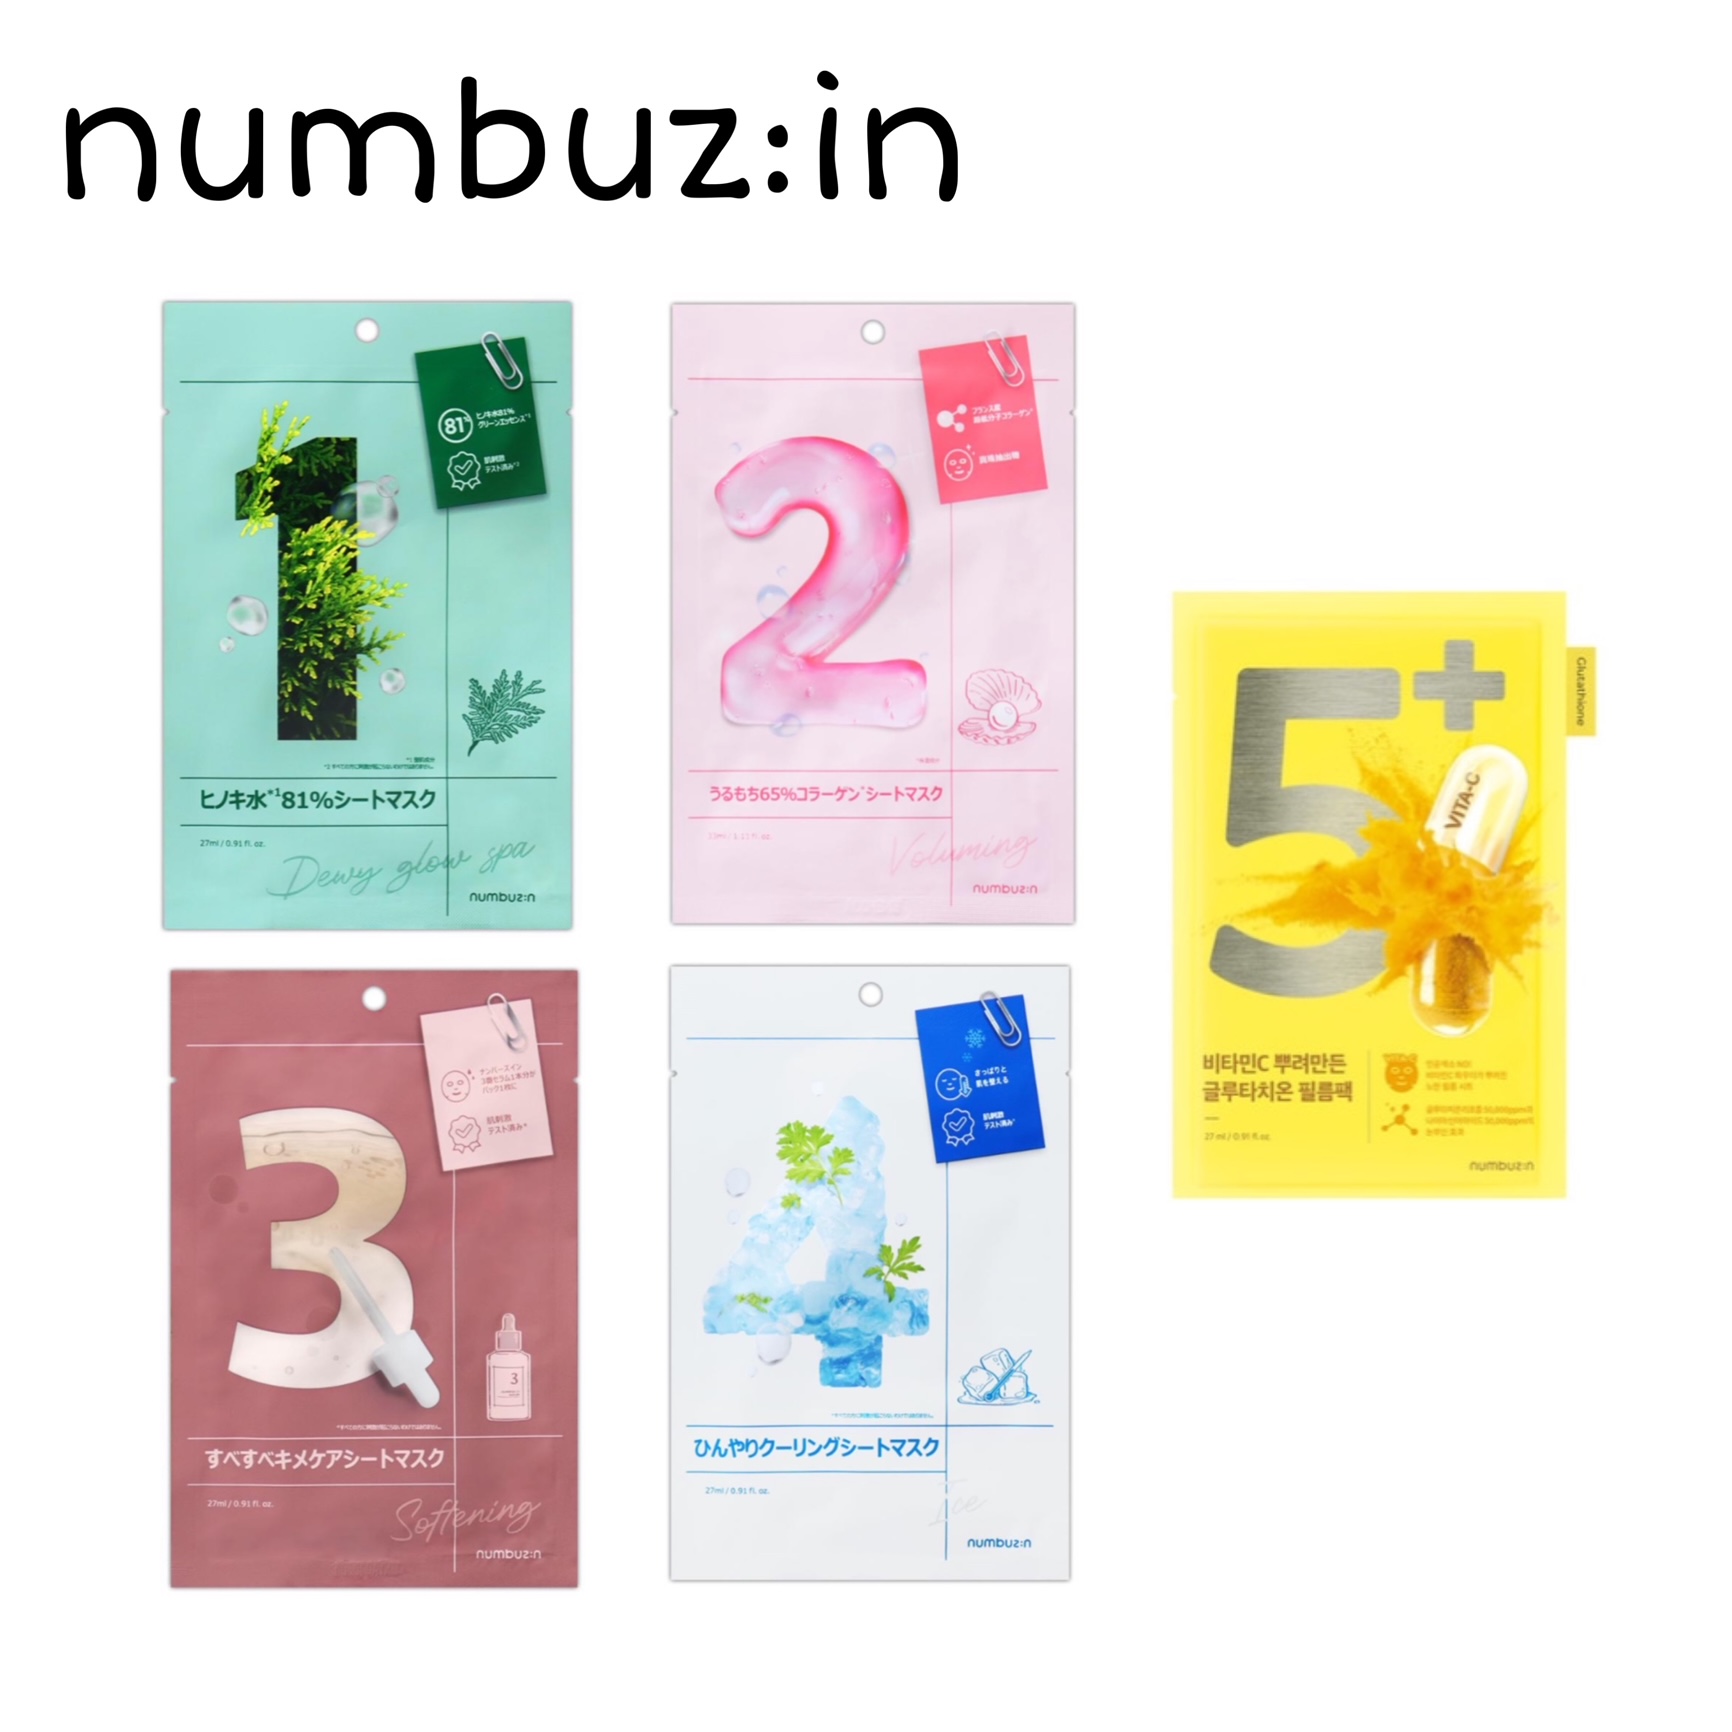 numbuz:n numbuzin ナンバーズイン シートマスク バラ売り 全5種